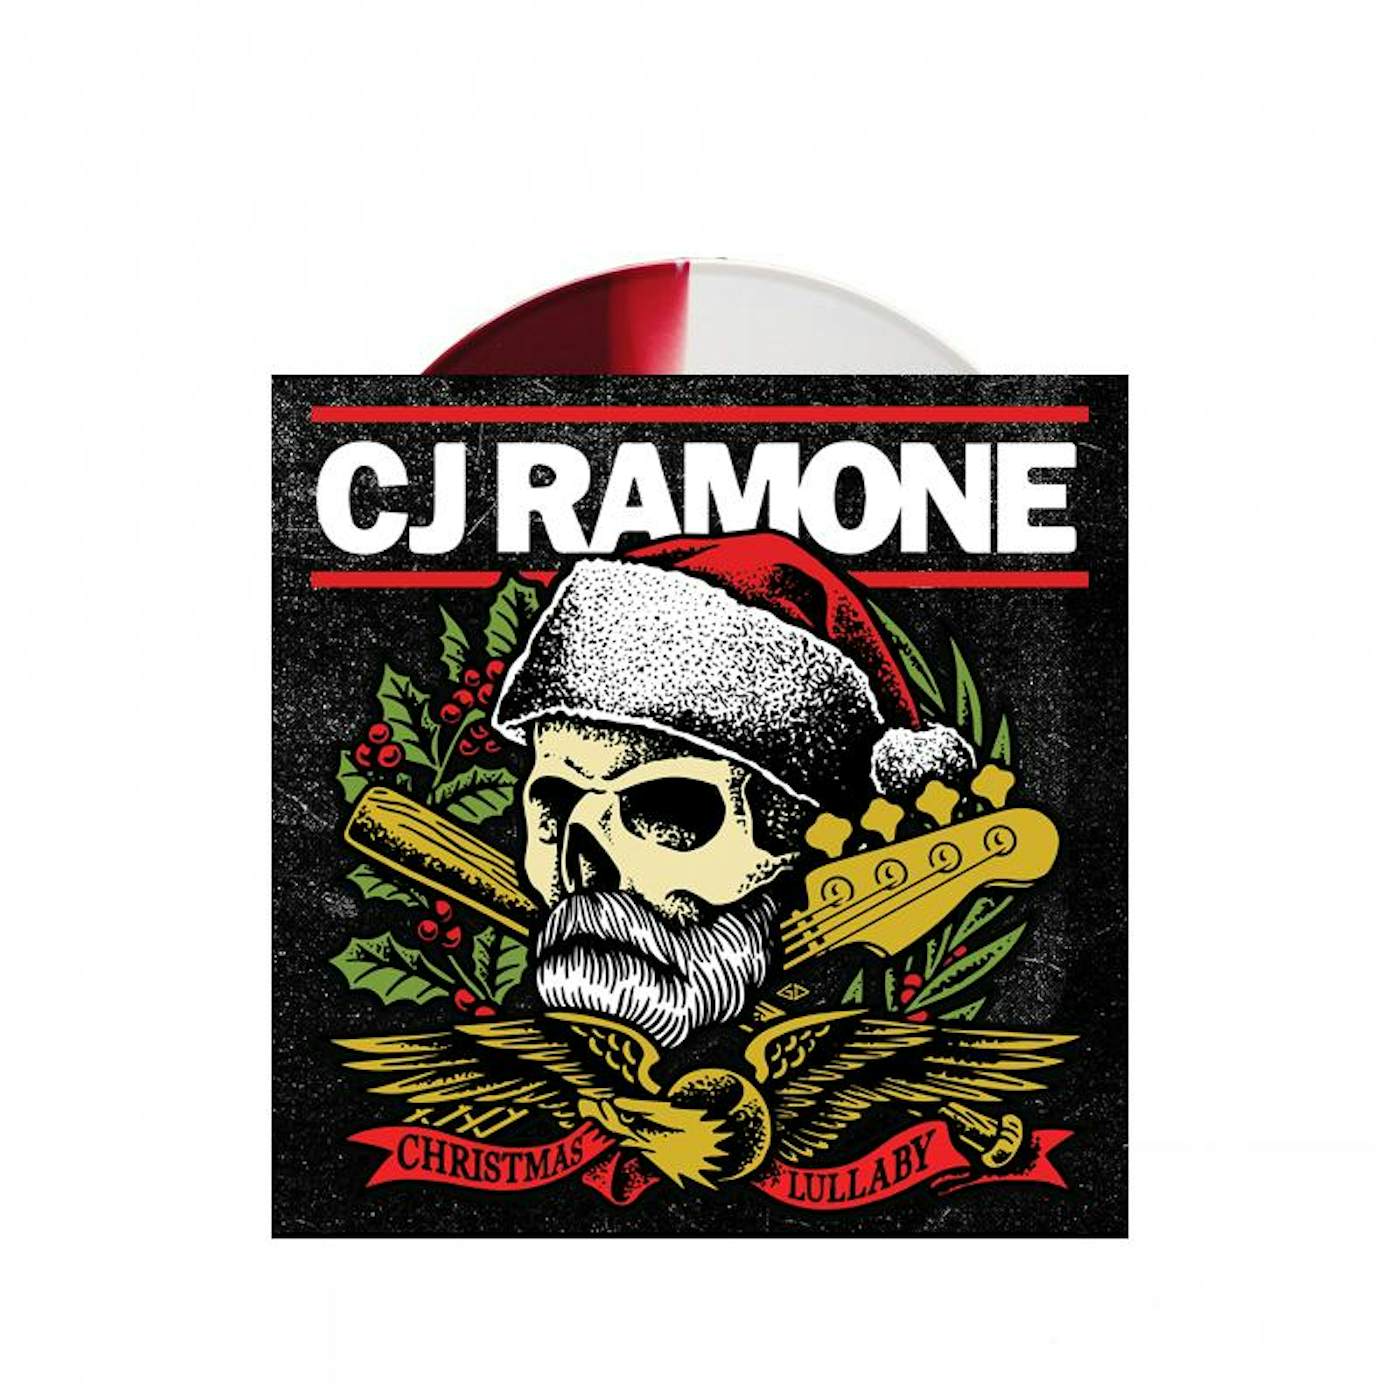 CJ Ramone Christmas Lullaby 7" (Half White/Half Red) (Vinyl)